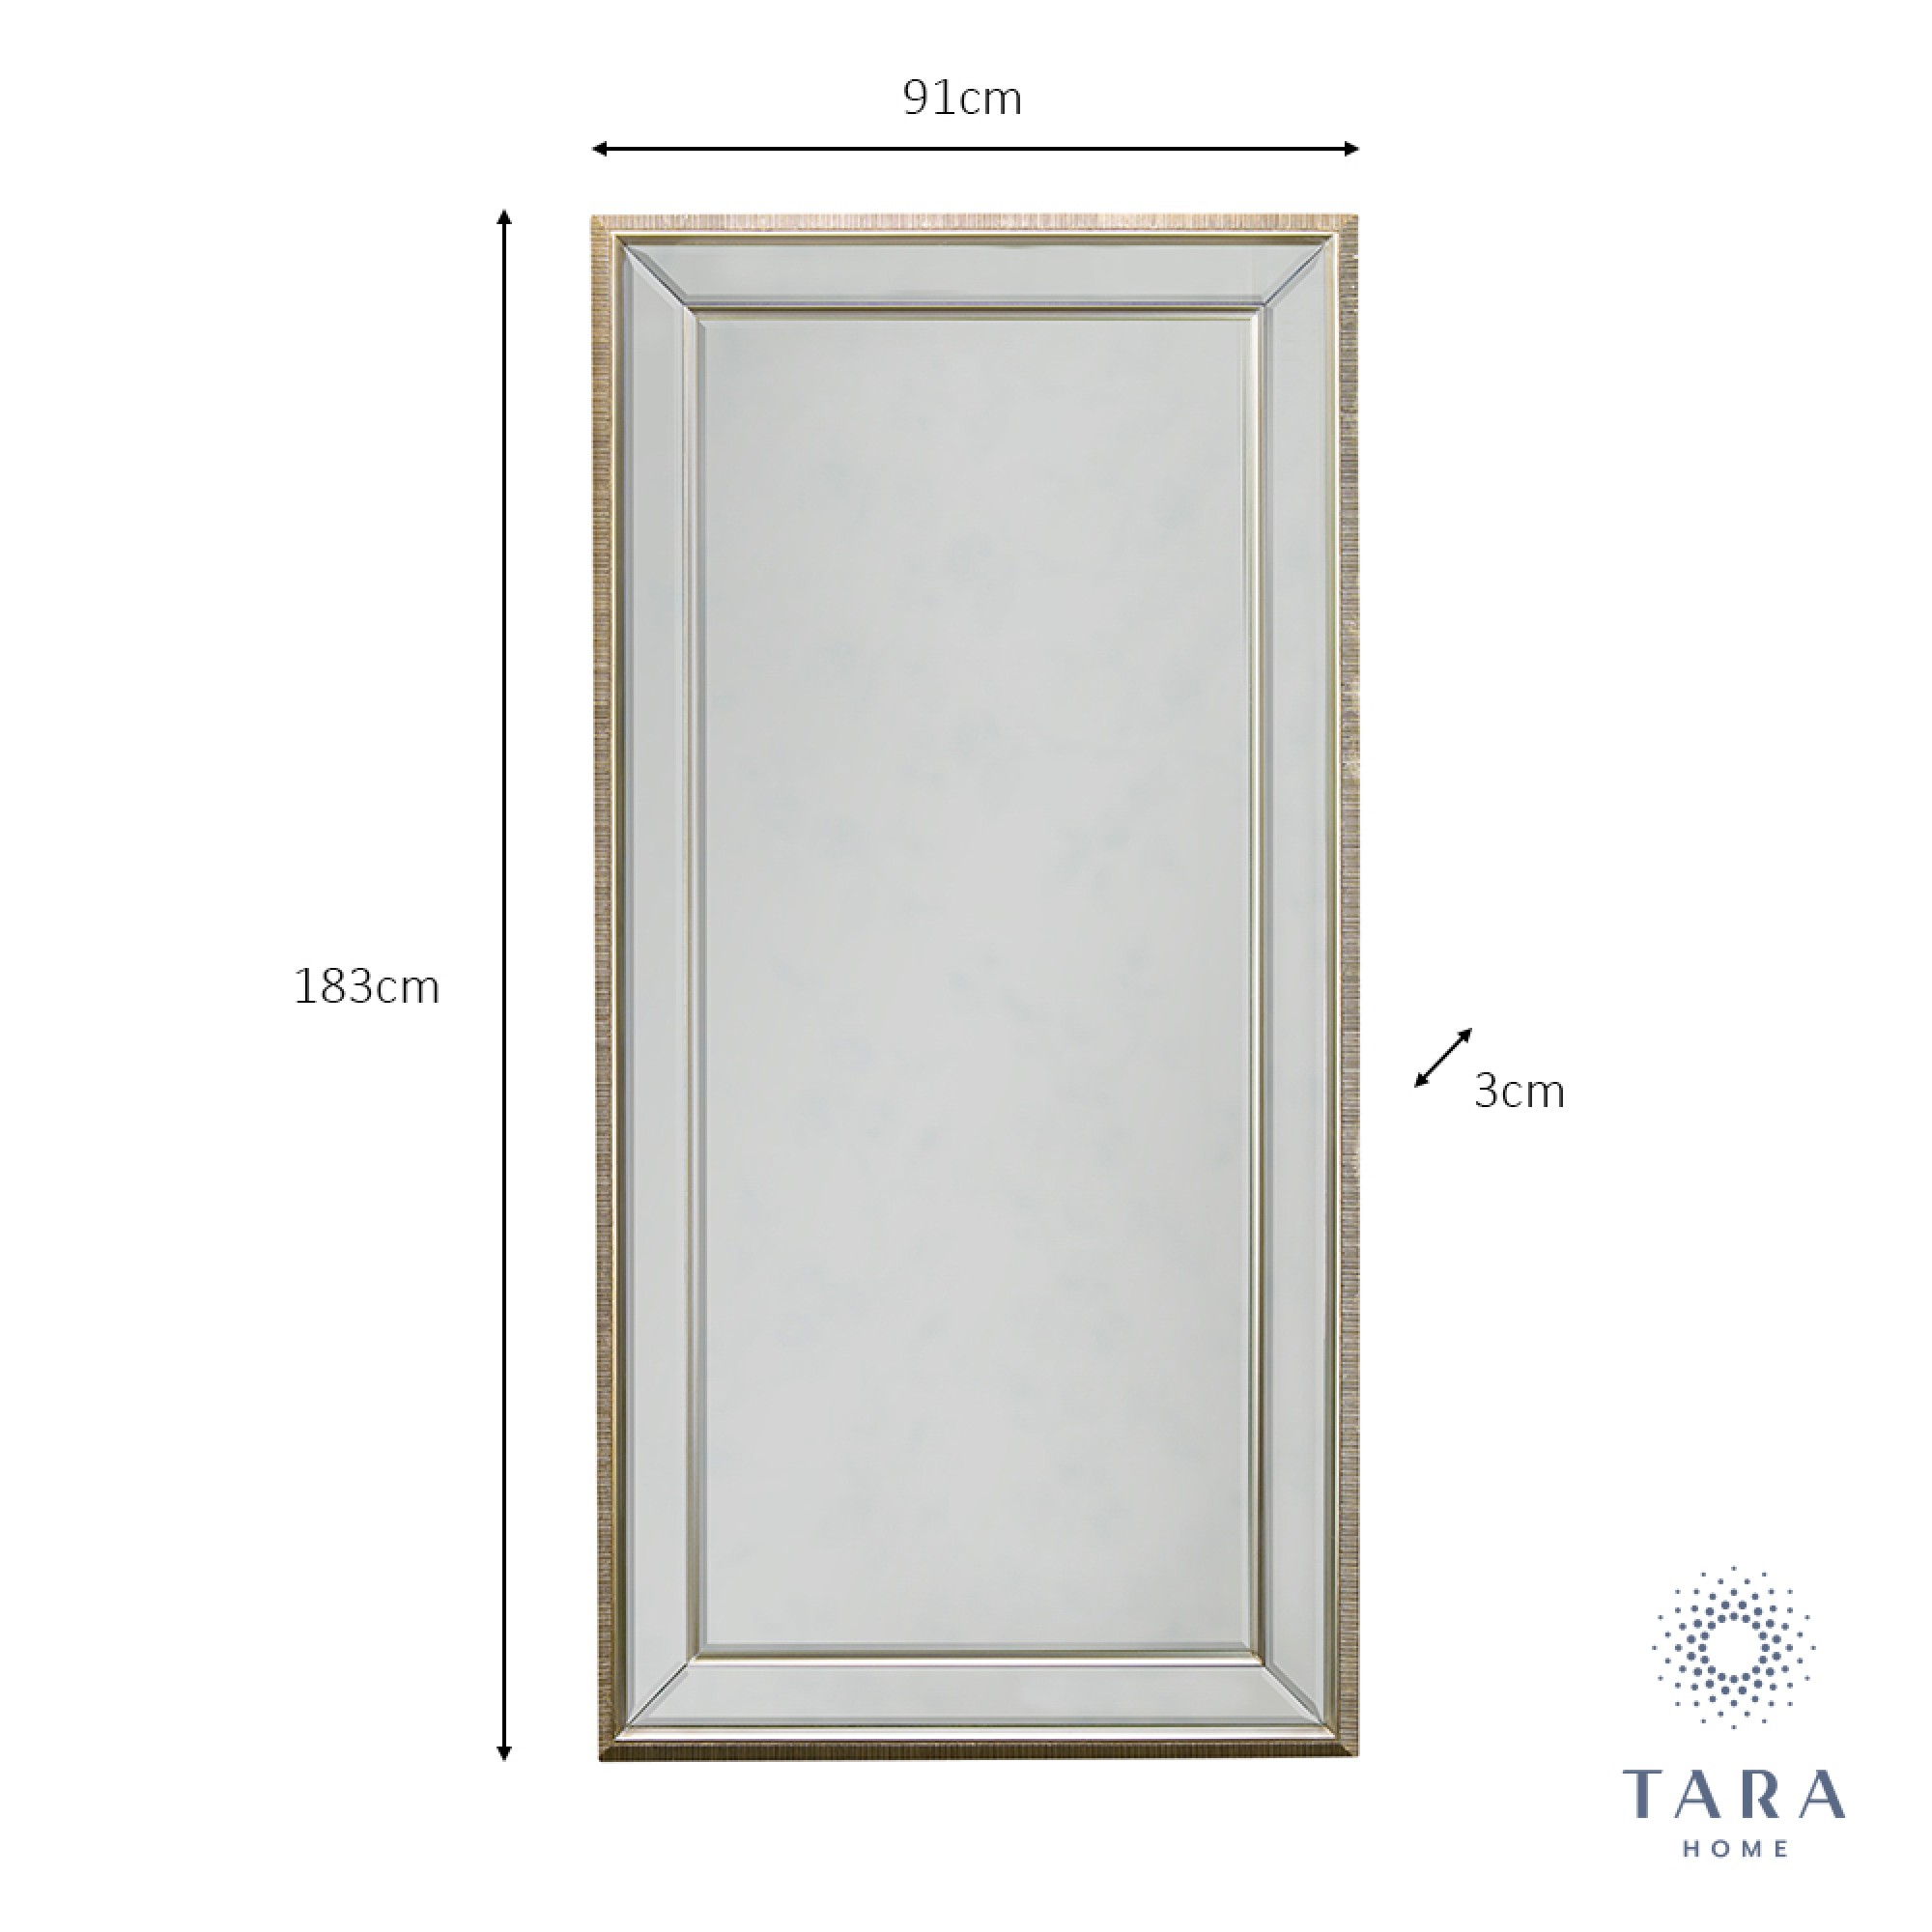 Tara Home Reflections Leaning Mirror Antique Glass 183cm Lawlors Furniture & Flooring